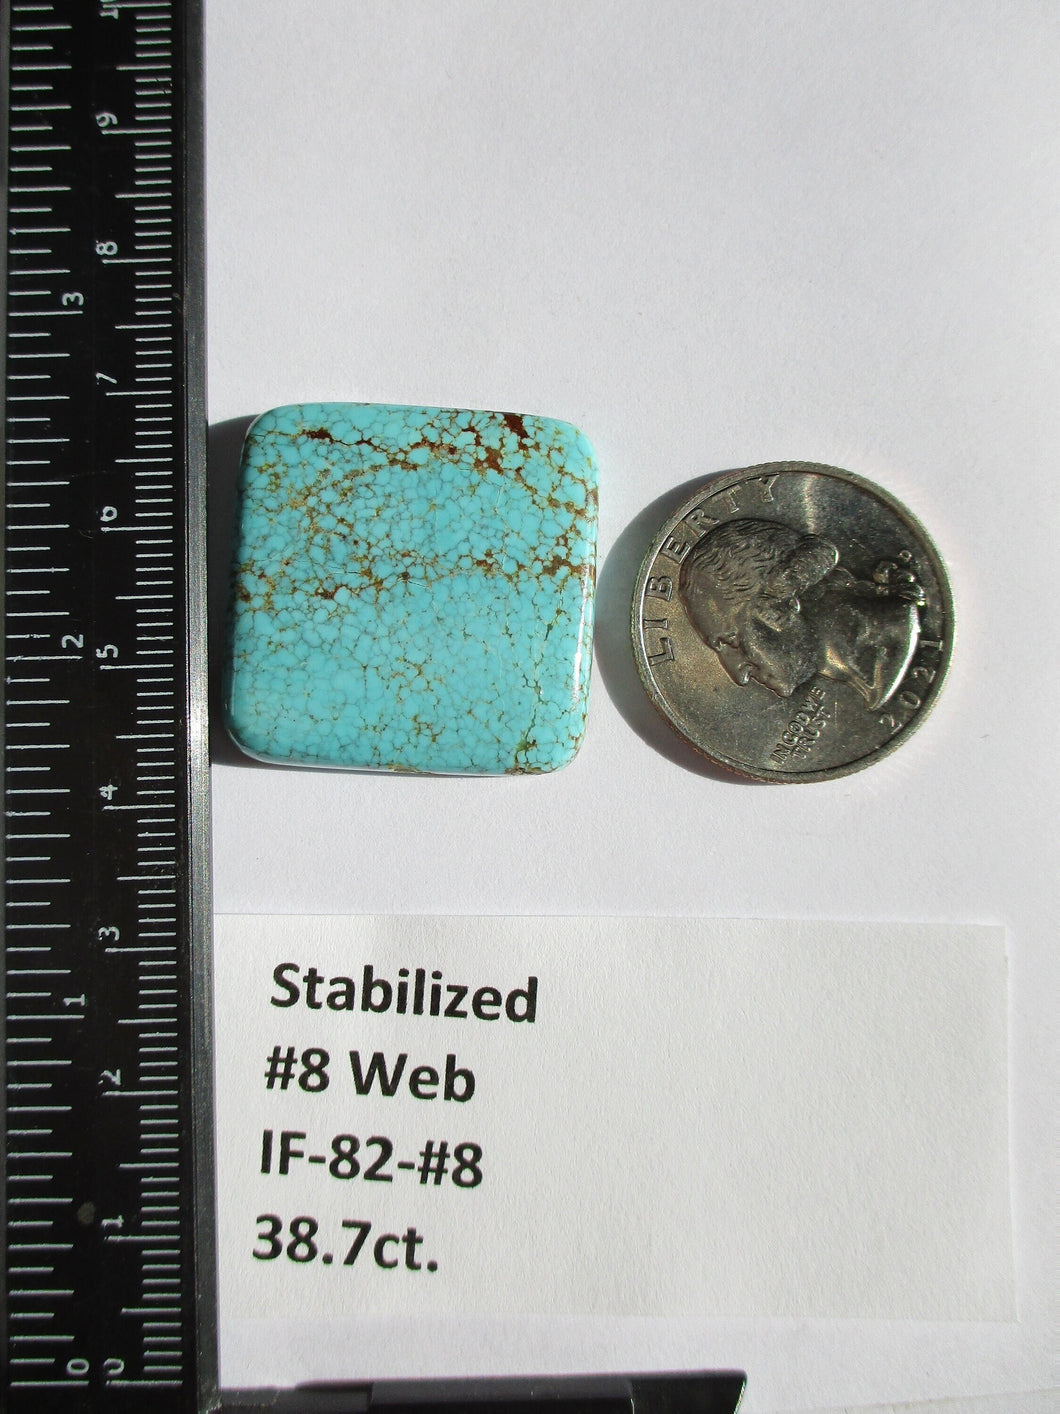 38.7 ct (27.5x27.5x5.5 mm) Stabilized Web #8 Turquoise, Cabochon Gemstone, # IF 82